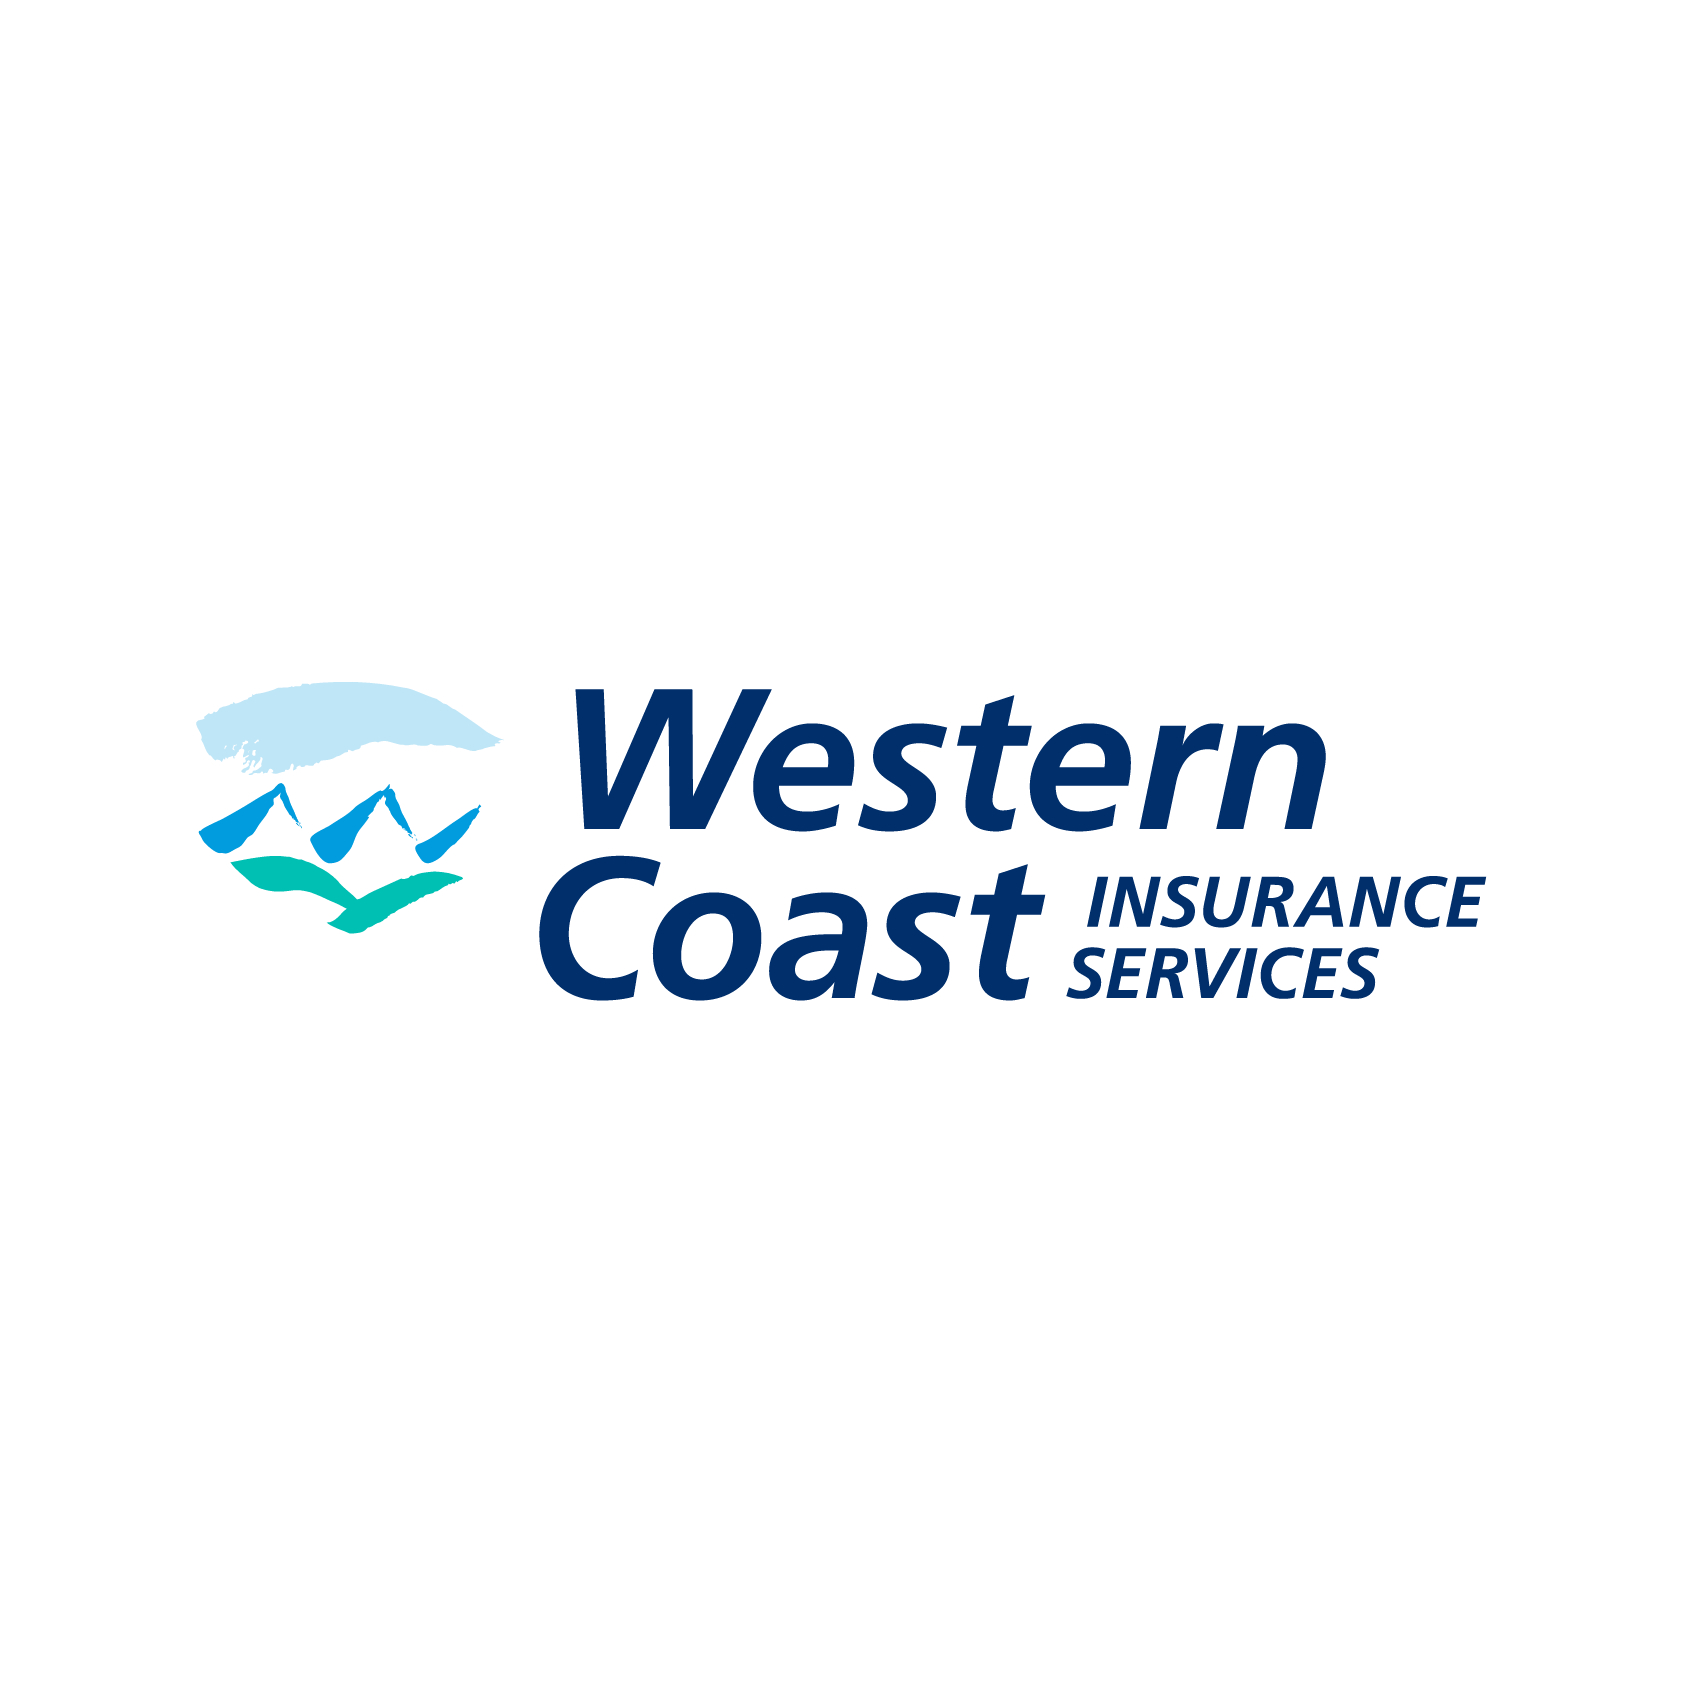 Western Coast Insurance Services Ltd. | Home, Car & Business Insurance - Assurance